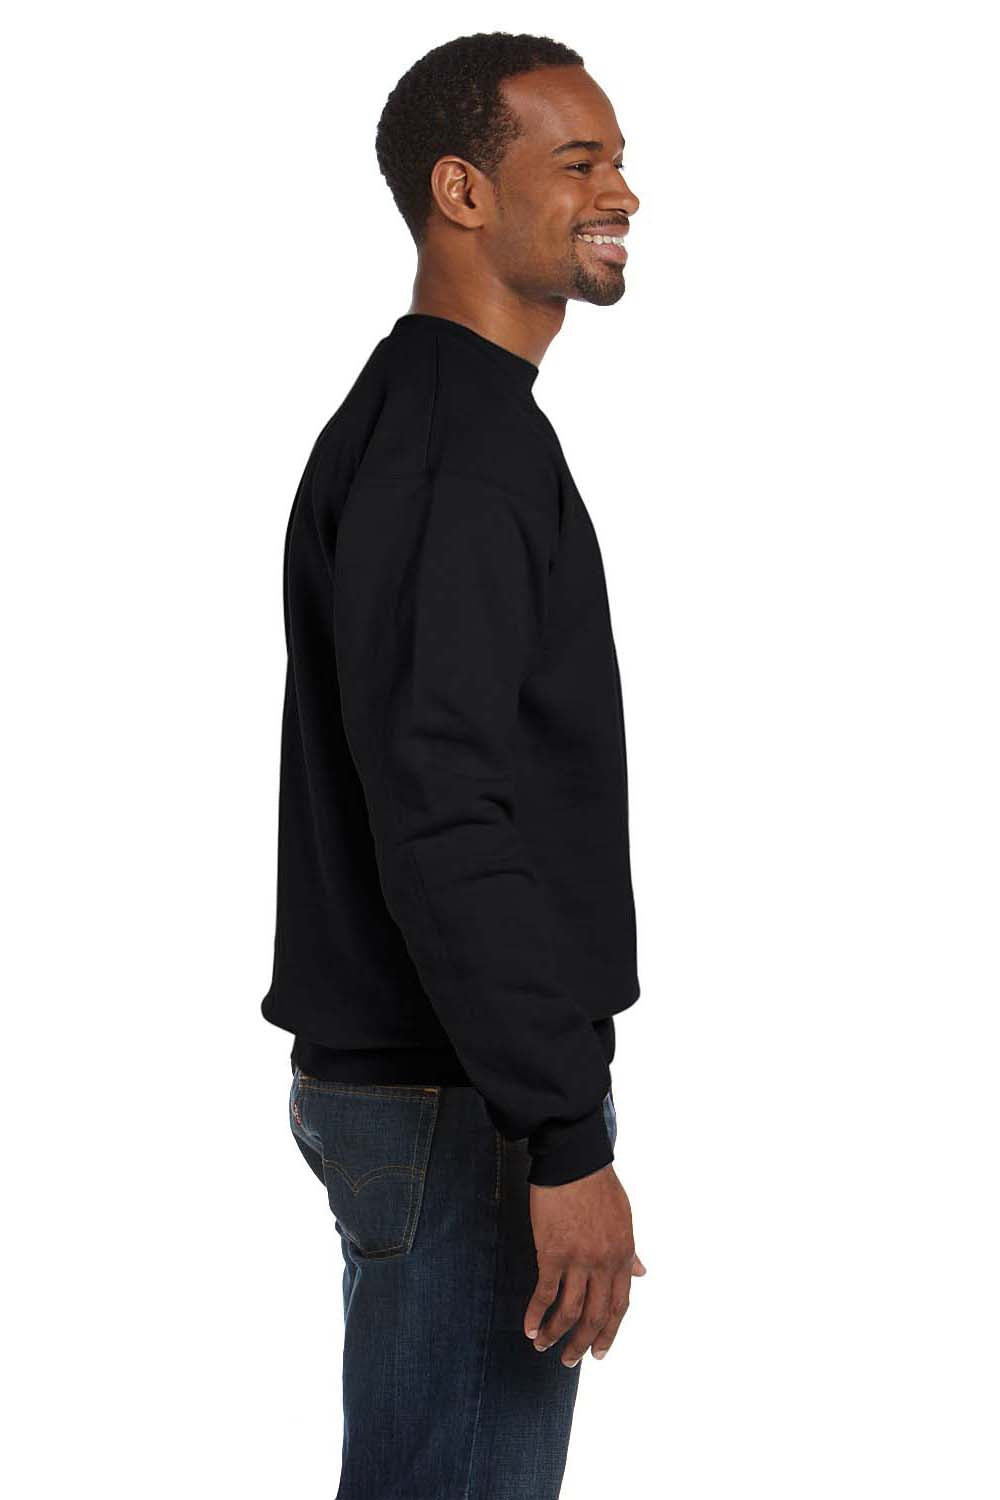 Hanes P160 Mens EcoSmart Print Pro XP Fleece Crewneck Sweatshirt Black Side